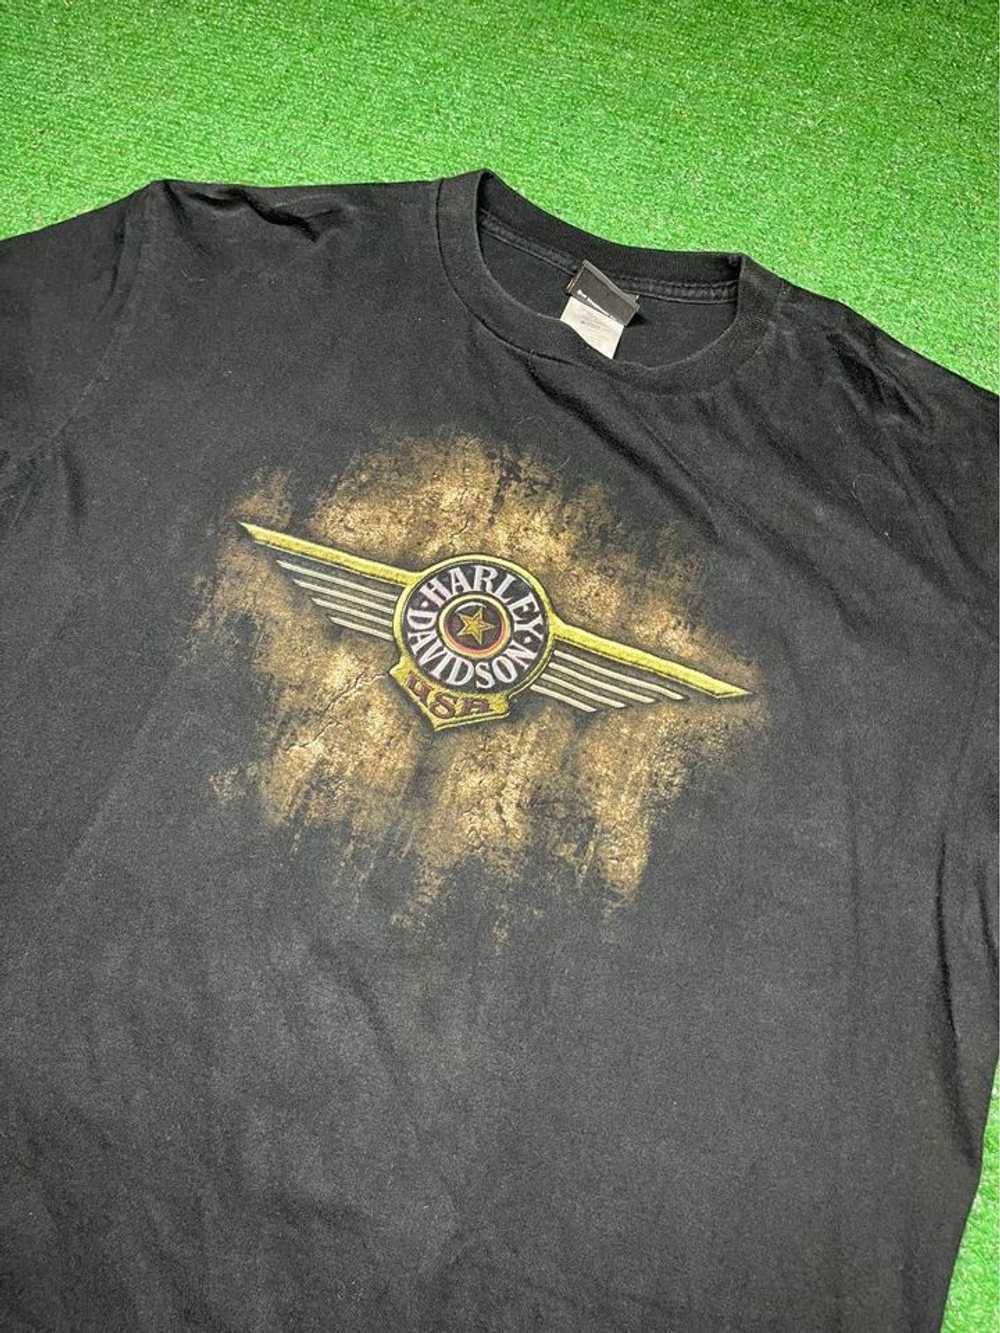 Harley Davidson Harley Davidson T-shirt Size XL - image 2